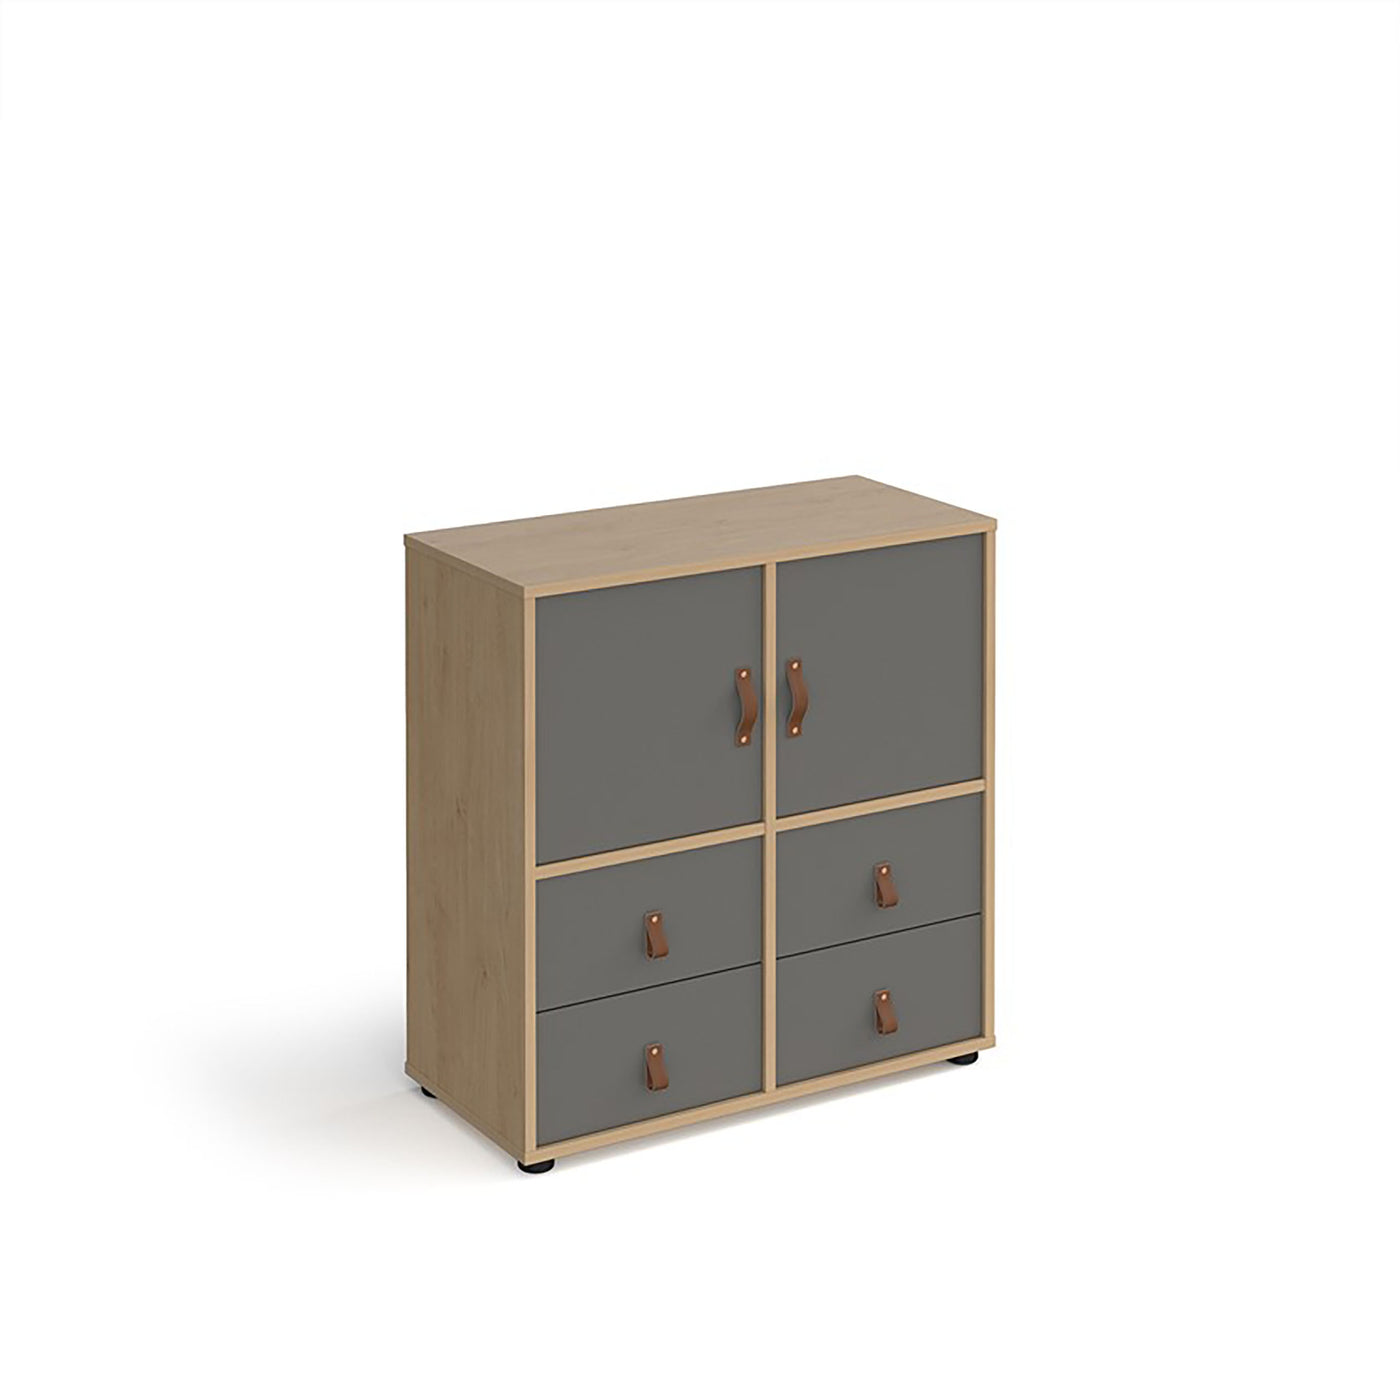 Cube Storage Unit Bundle 5 | Home Office Storage | Storage Shelves | Home Storage | Storage Solutions | Wooden Storage | Home Furnishings | Home Office Furniture | Home Office Storage